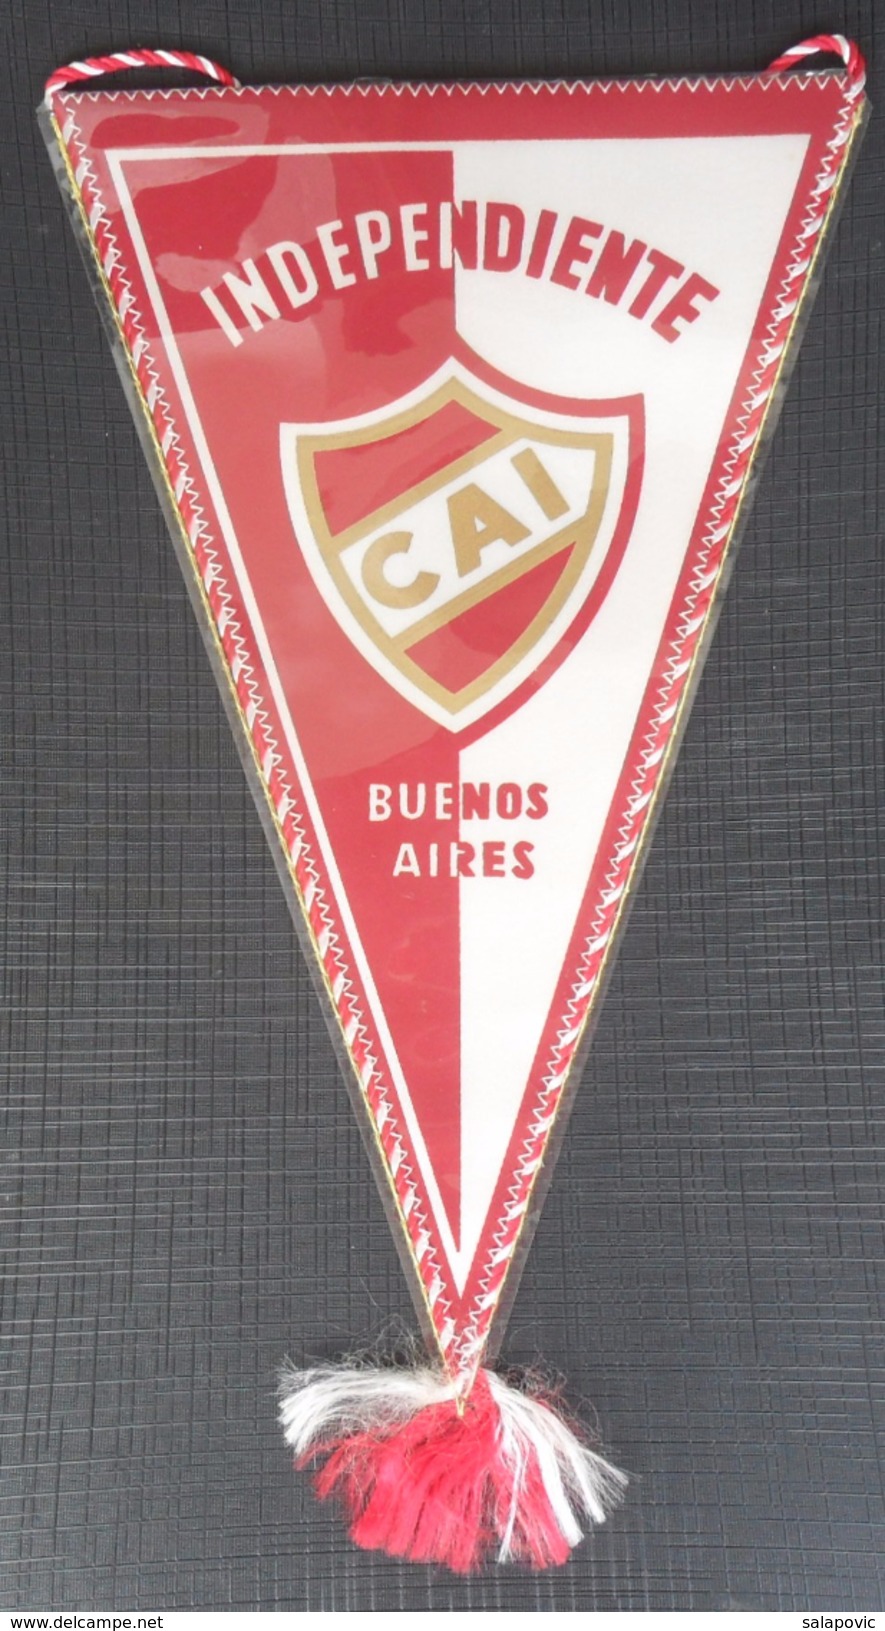 Club Atlético Independiente CAI Buenos Aires Argentina FOOTBALL CLUB, SOCCER / FUTBOL / CALCIO OLD PENNANT, SPORTS FLAG - Apparel, Souvenirs & Other